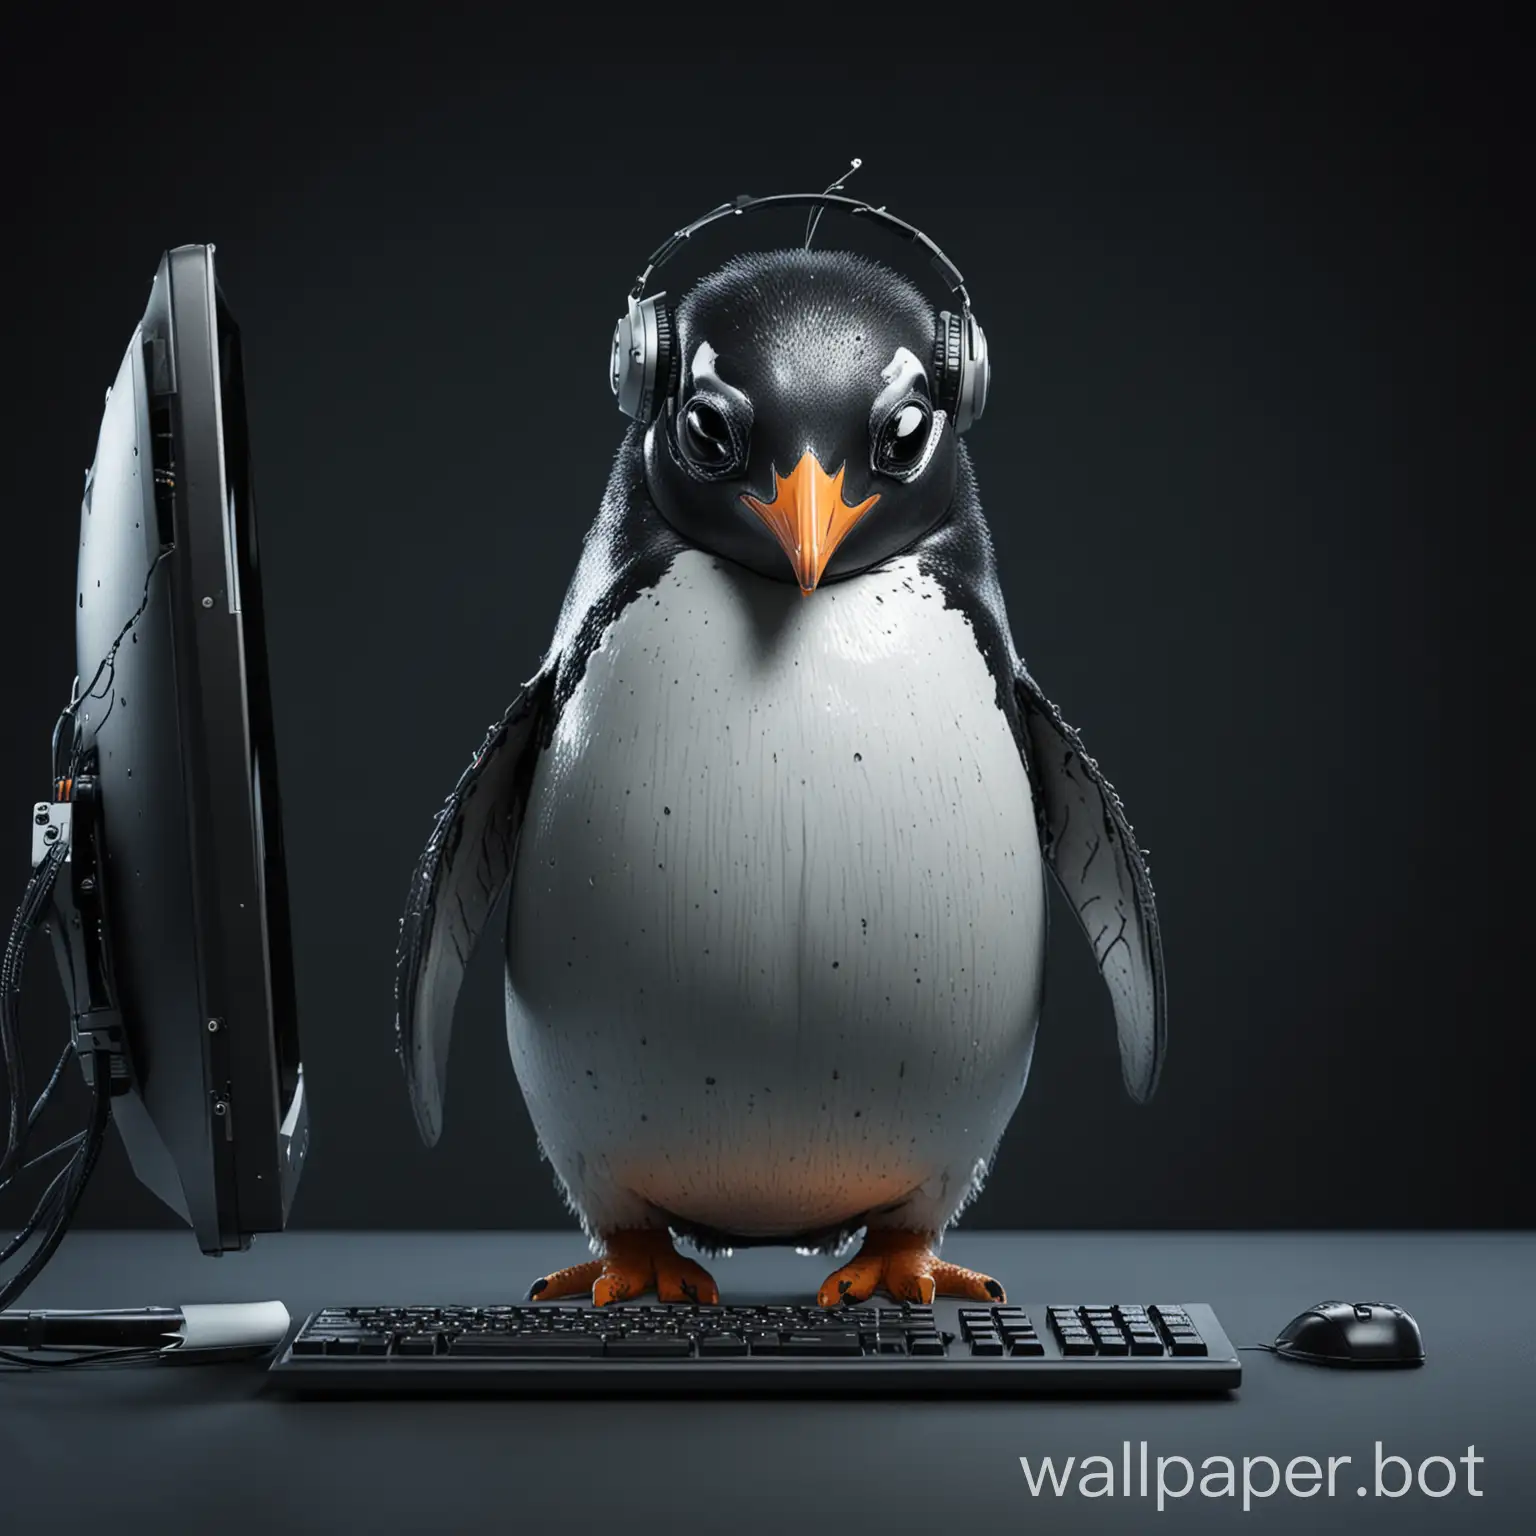 пингвин киборг за компьютером на темном фоне